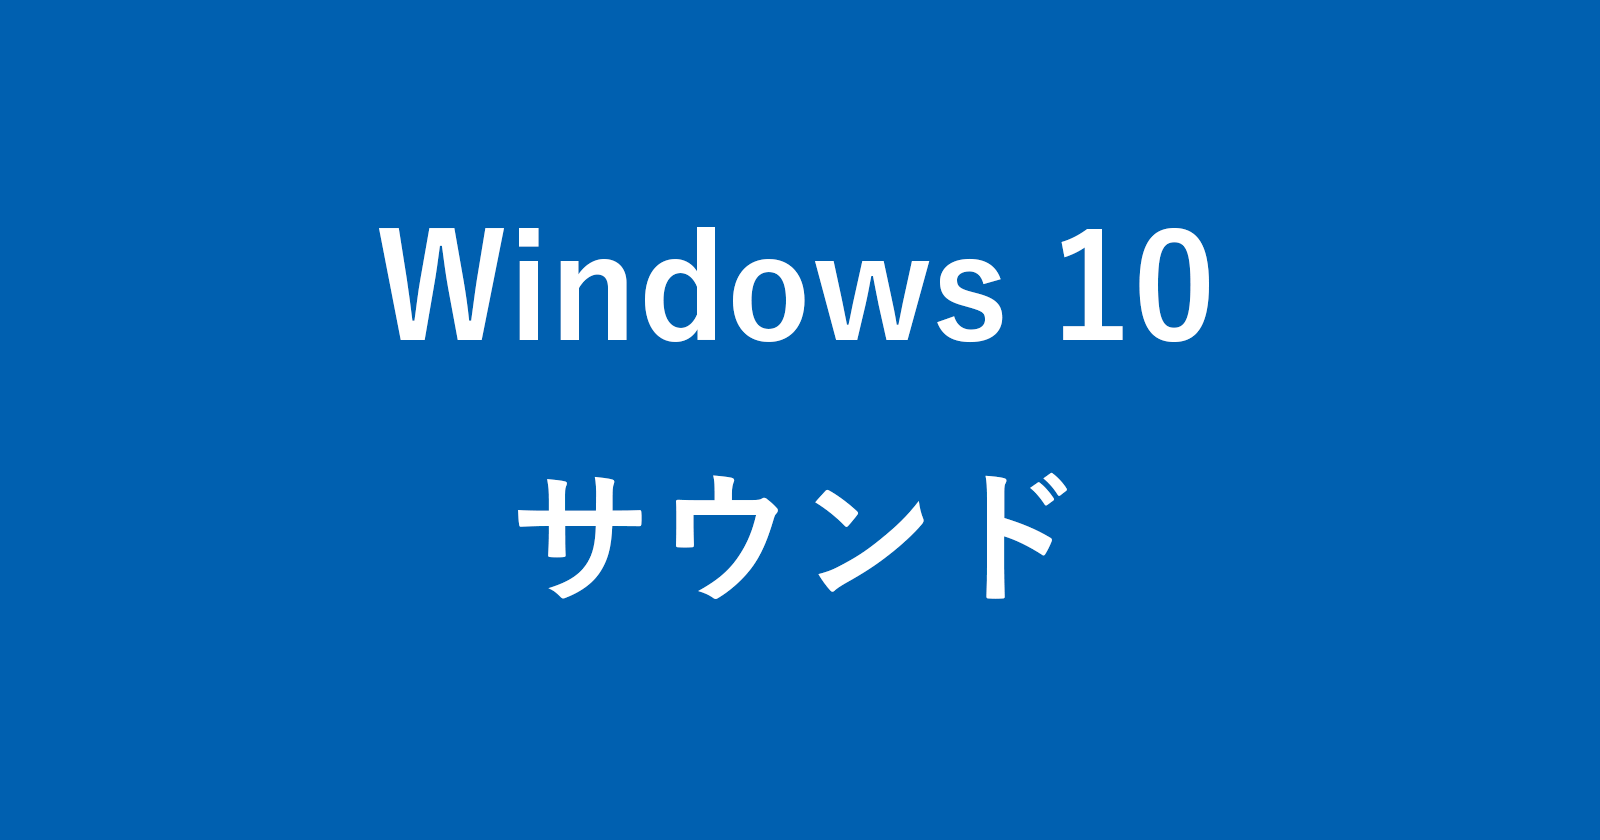 windows 10 sounds